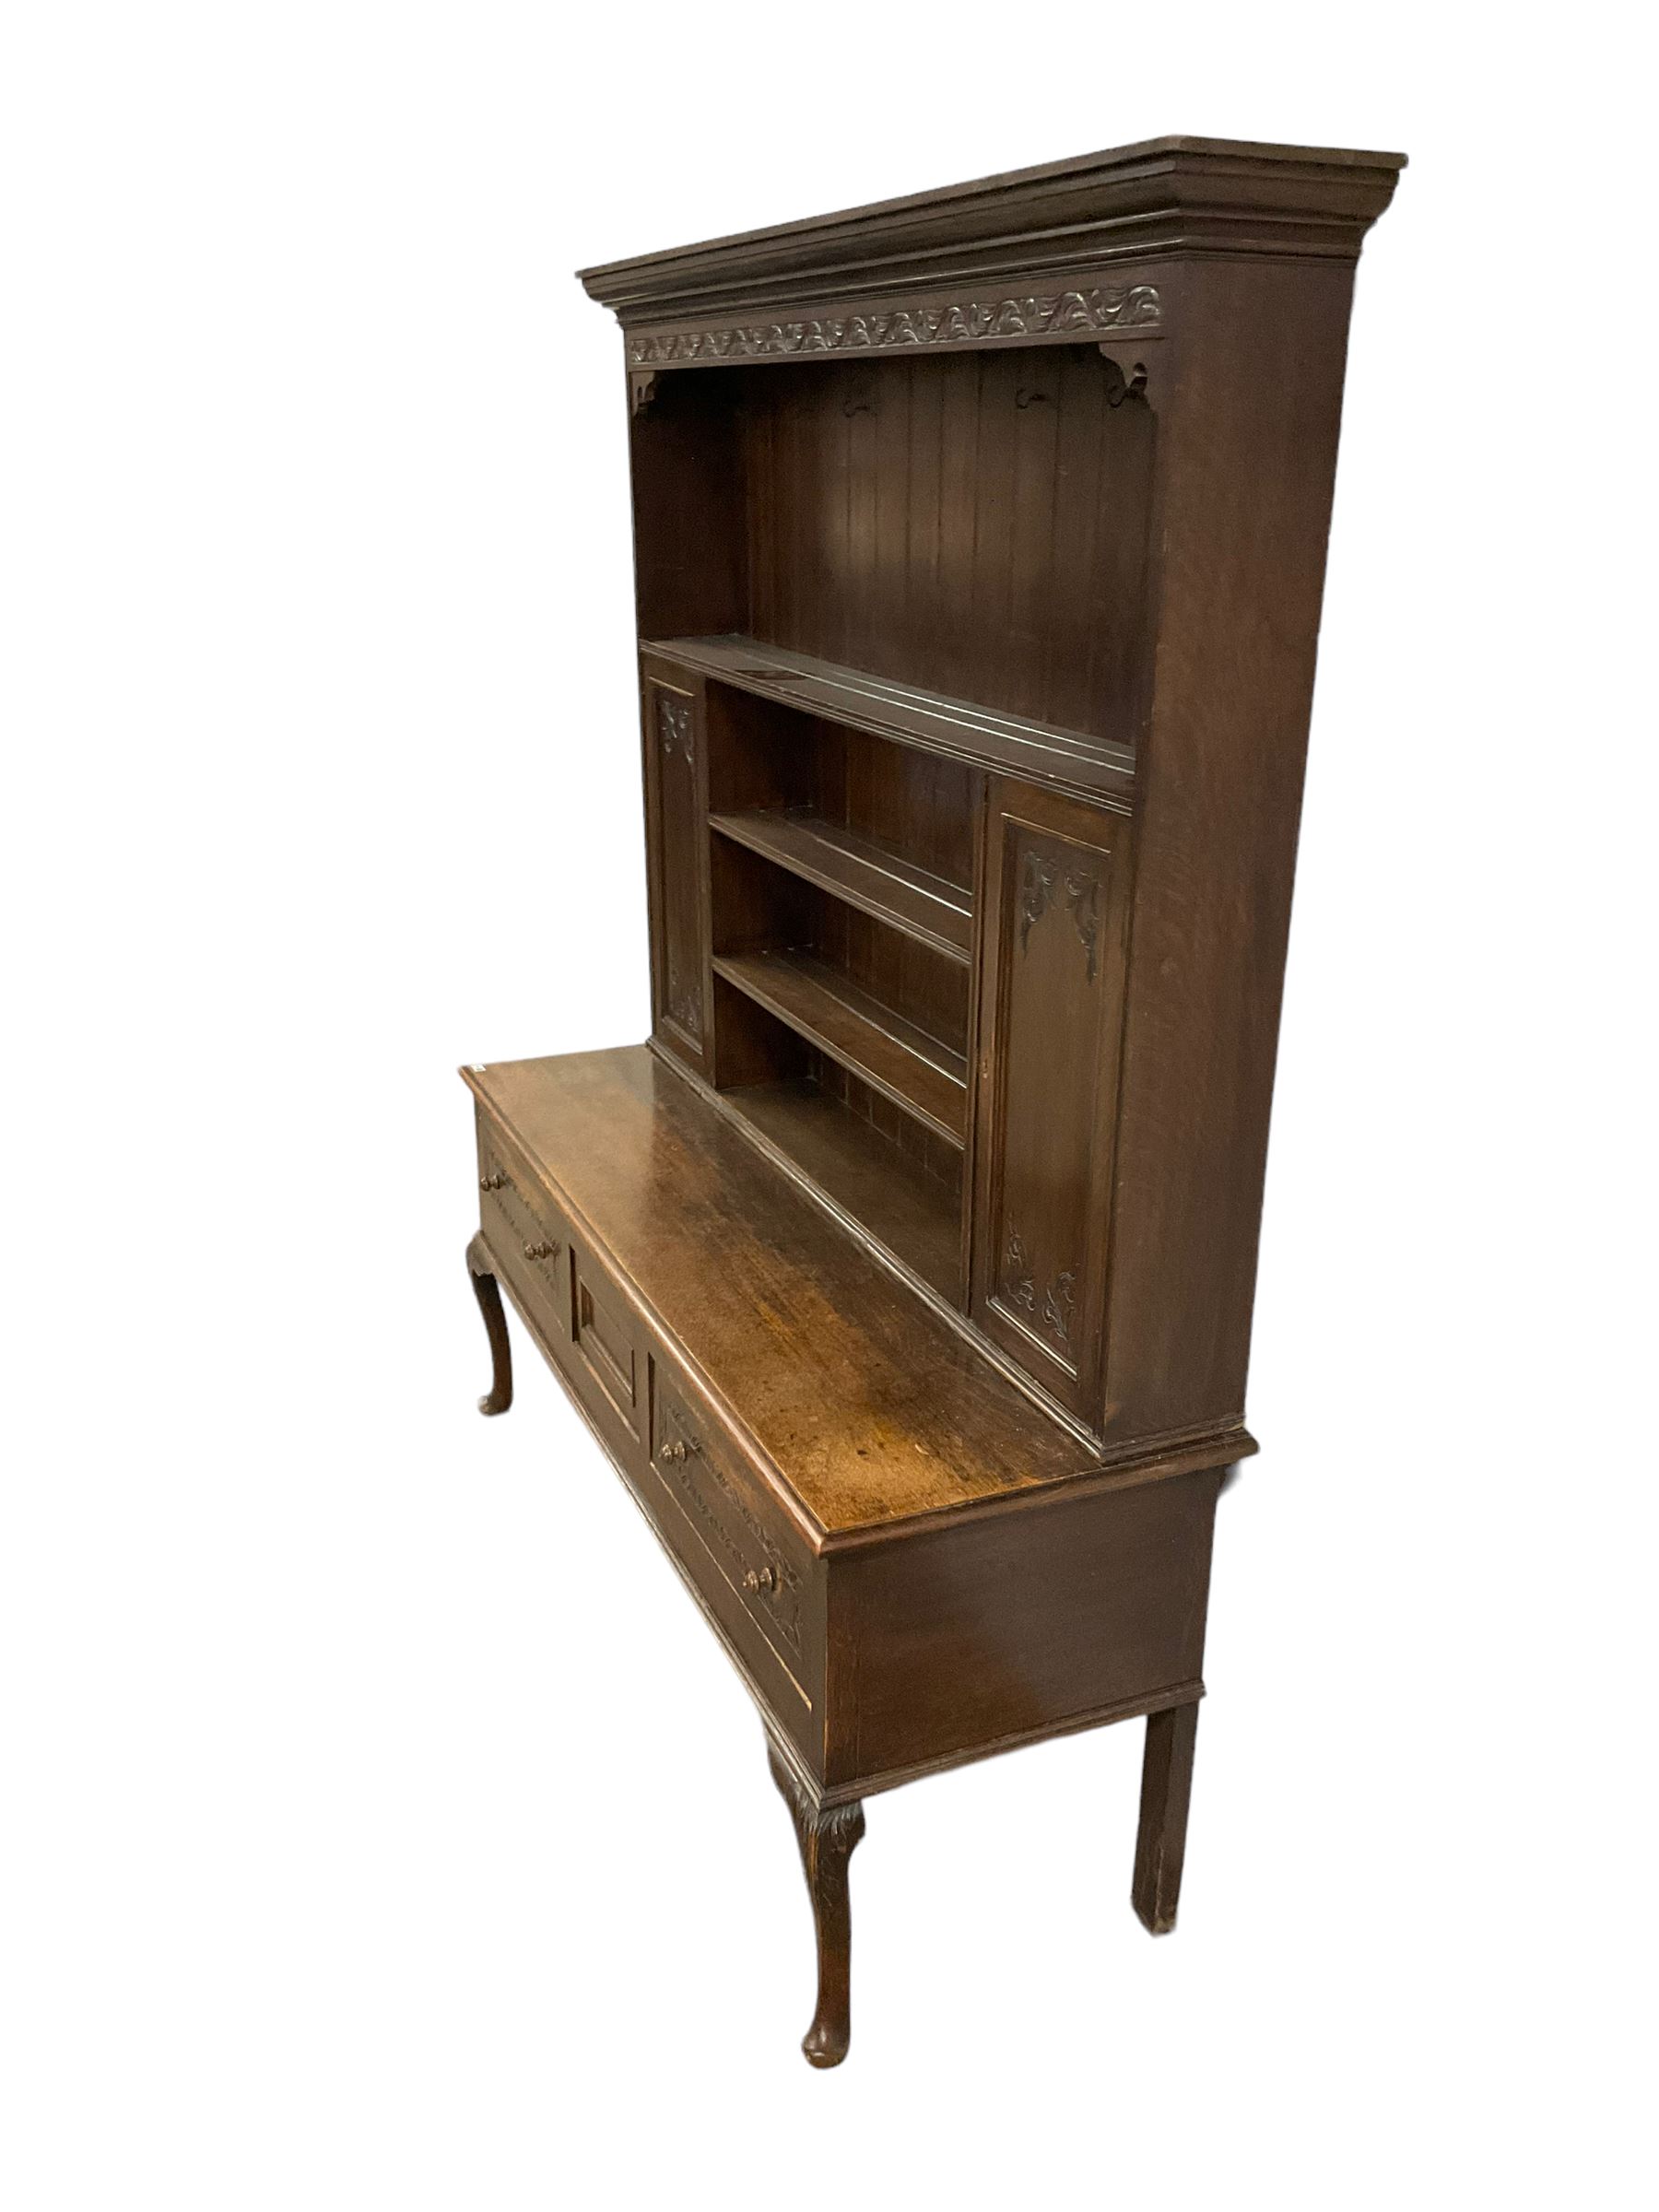 19th century oak dresser - Image 3 of 7